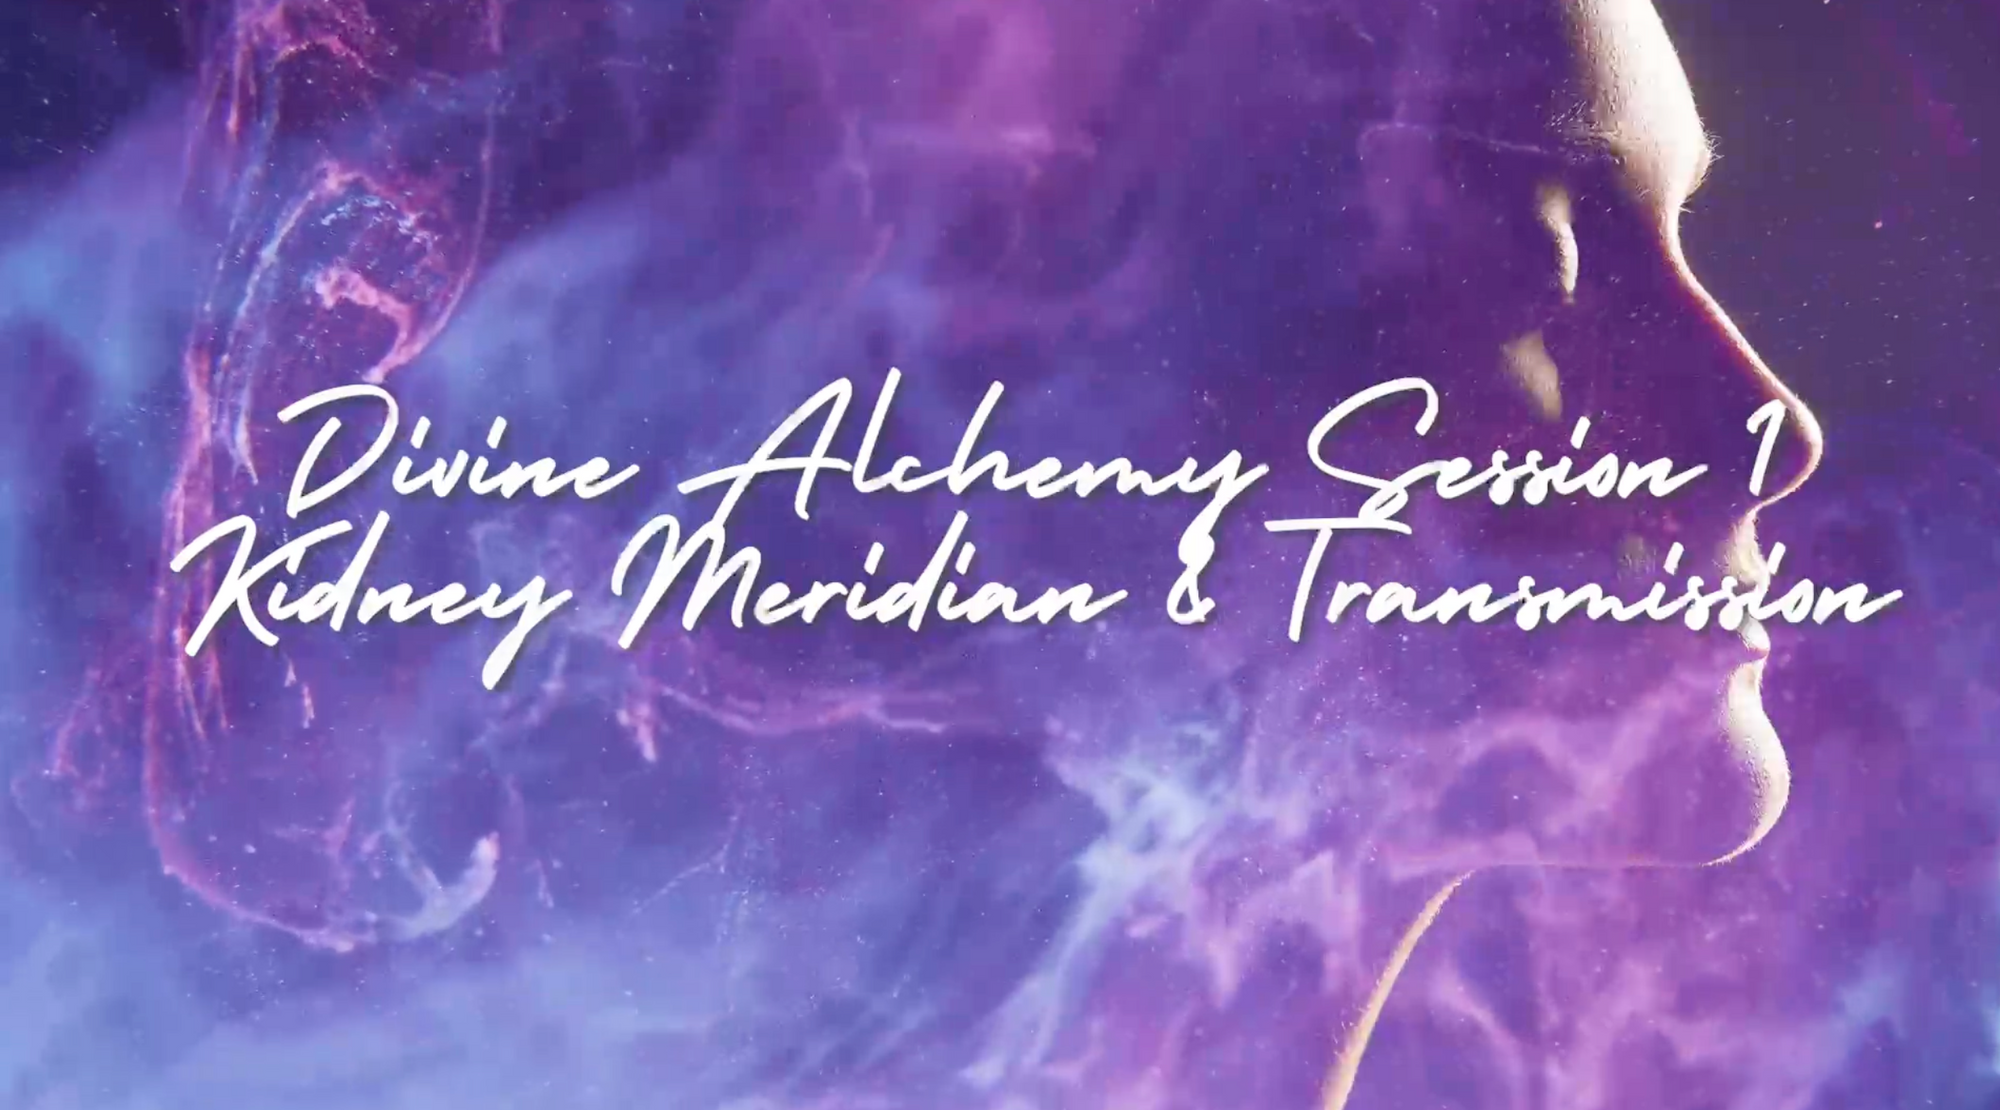 Divine Alchemy Session 1 - Kidney Meridian & Transmission